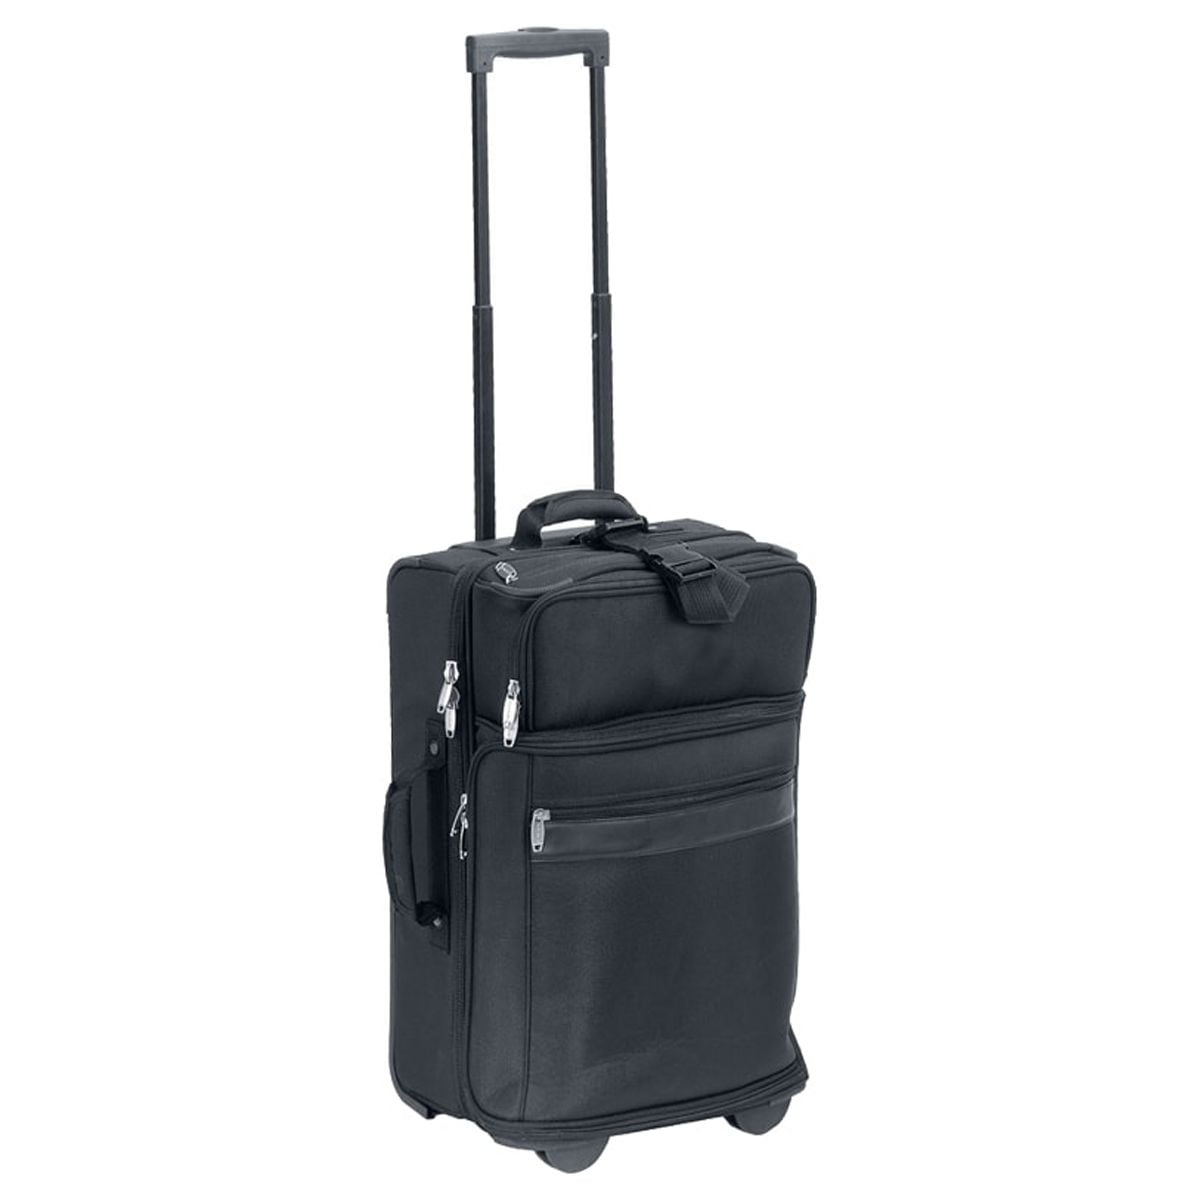 Travelwell 3-in-1 Luggage Case - Walmart.com